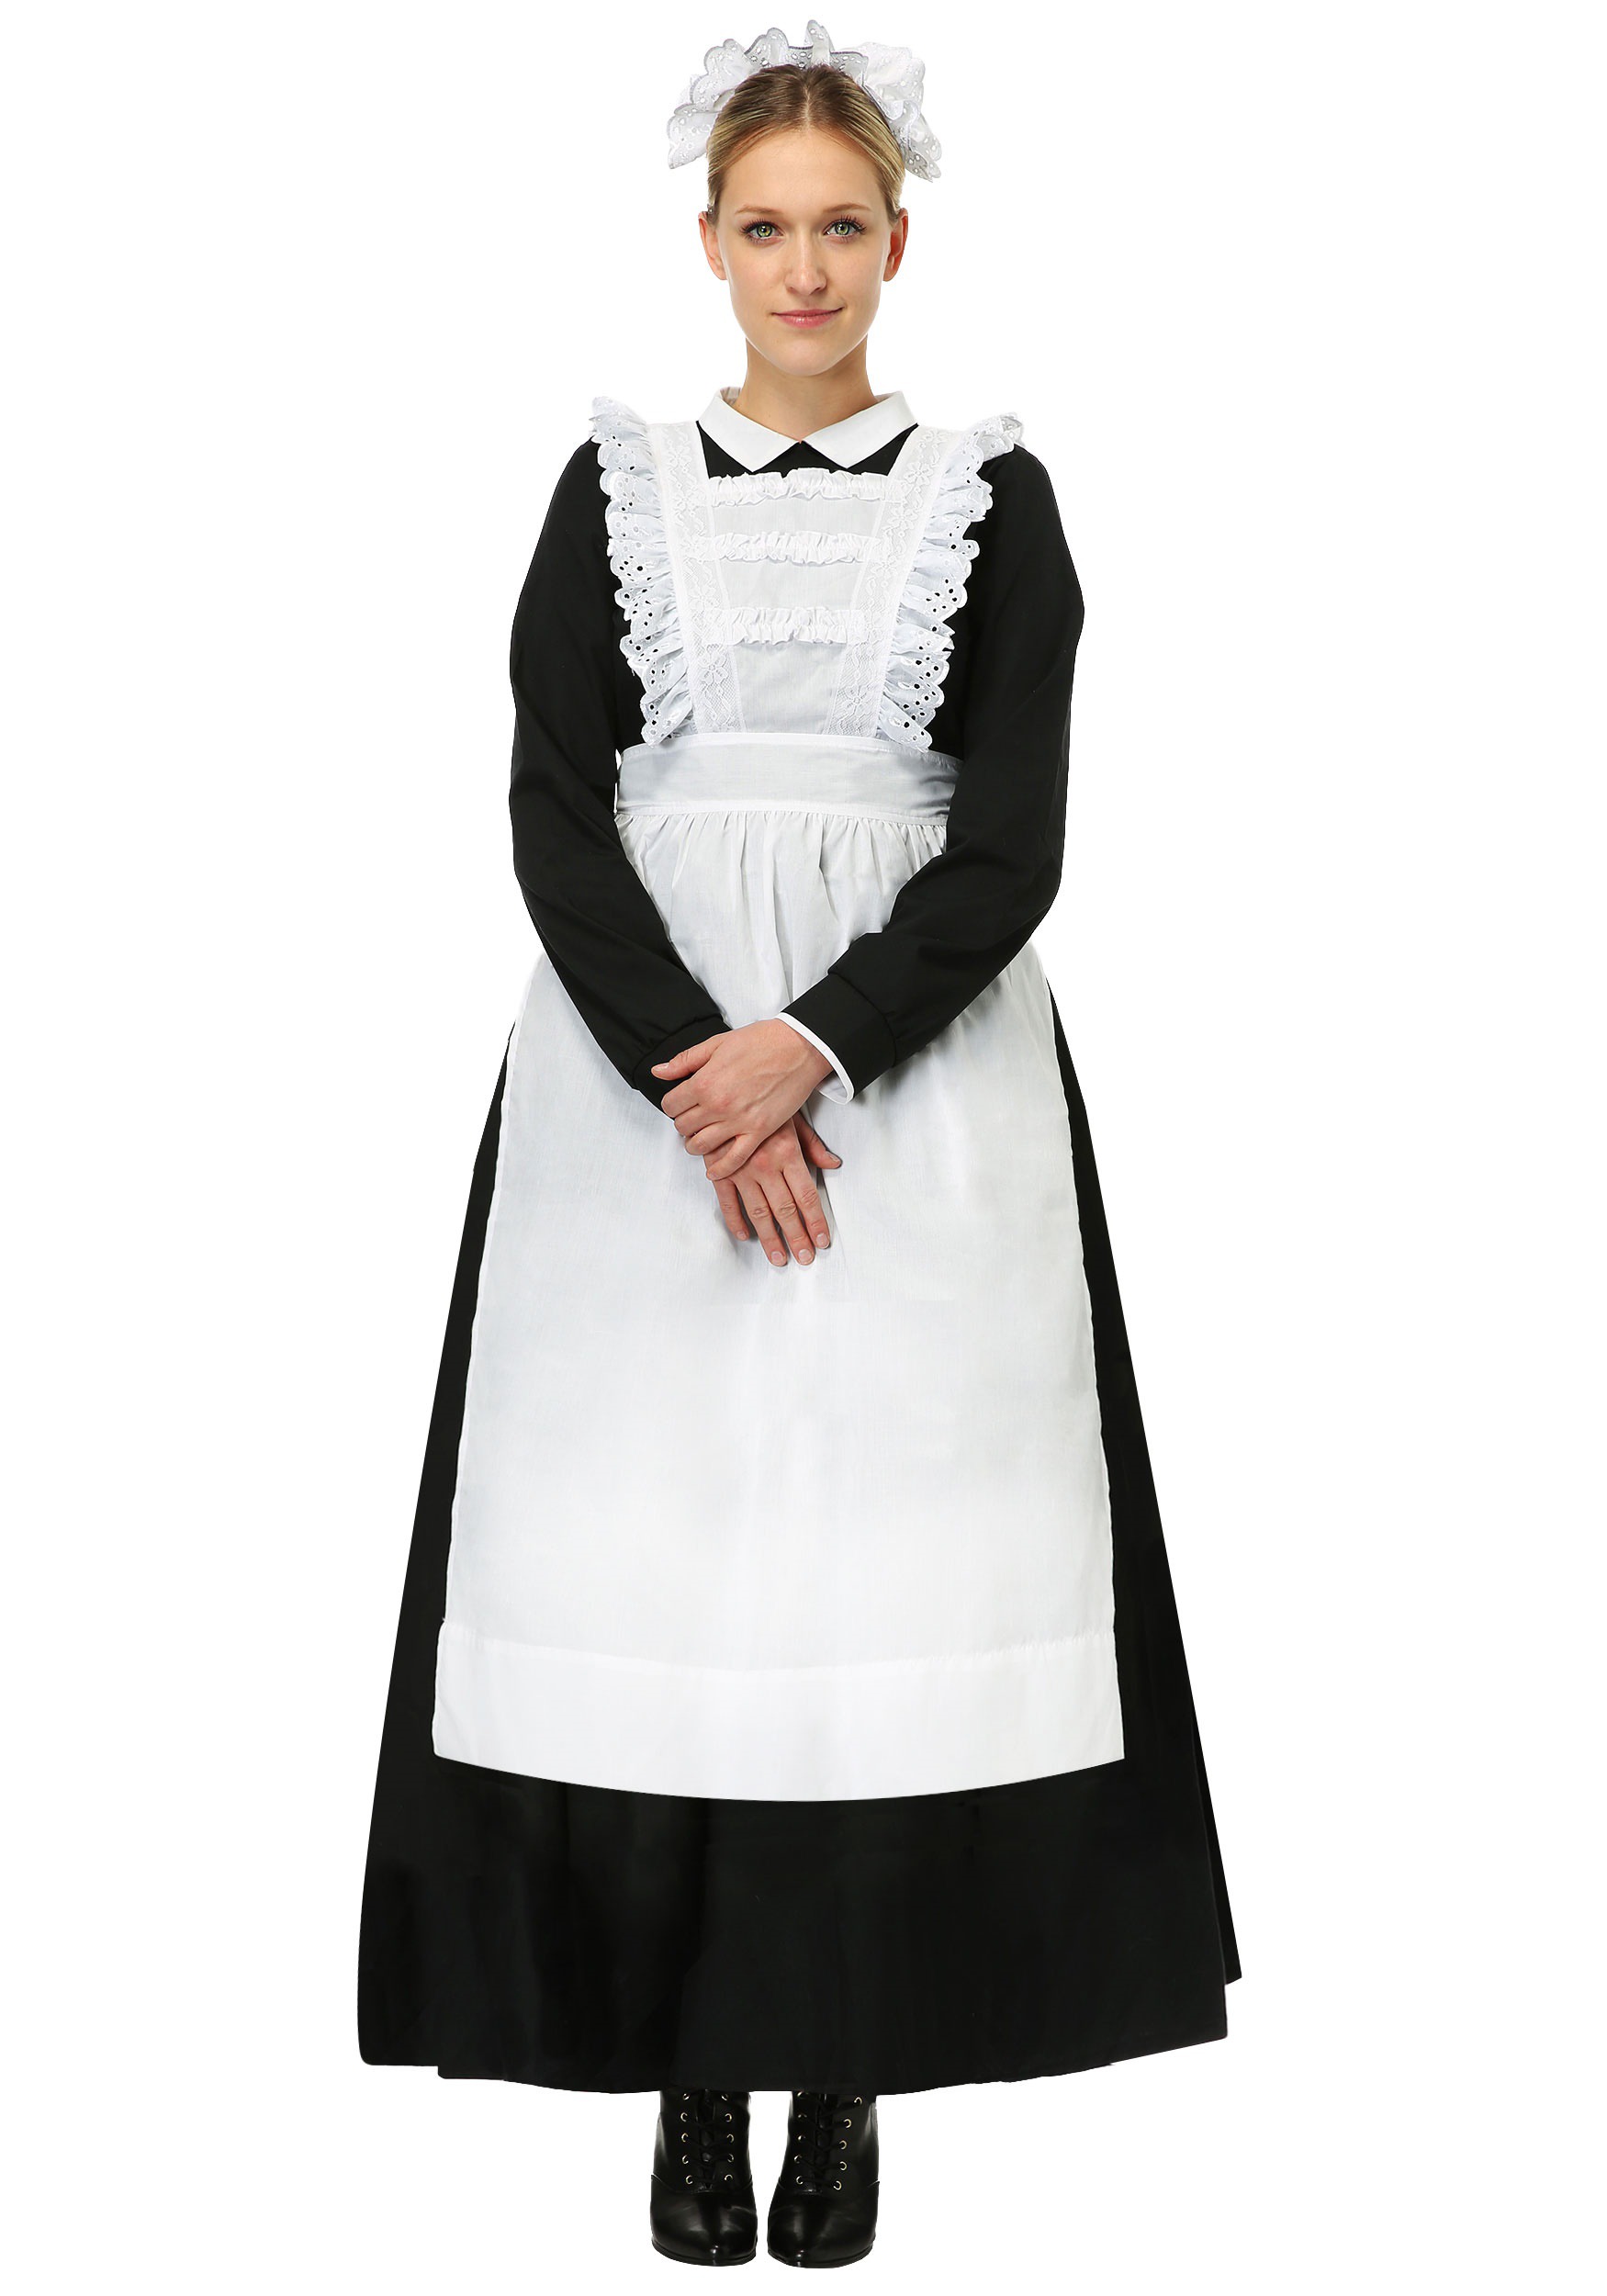 Photos - Fancy Dress Fancy FUN Costumes Women's Traditional Maid  Dress Costume Black/White 